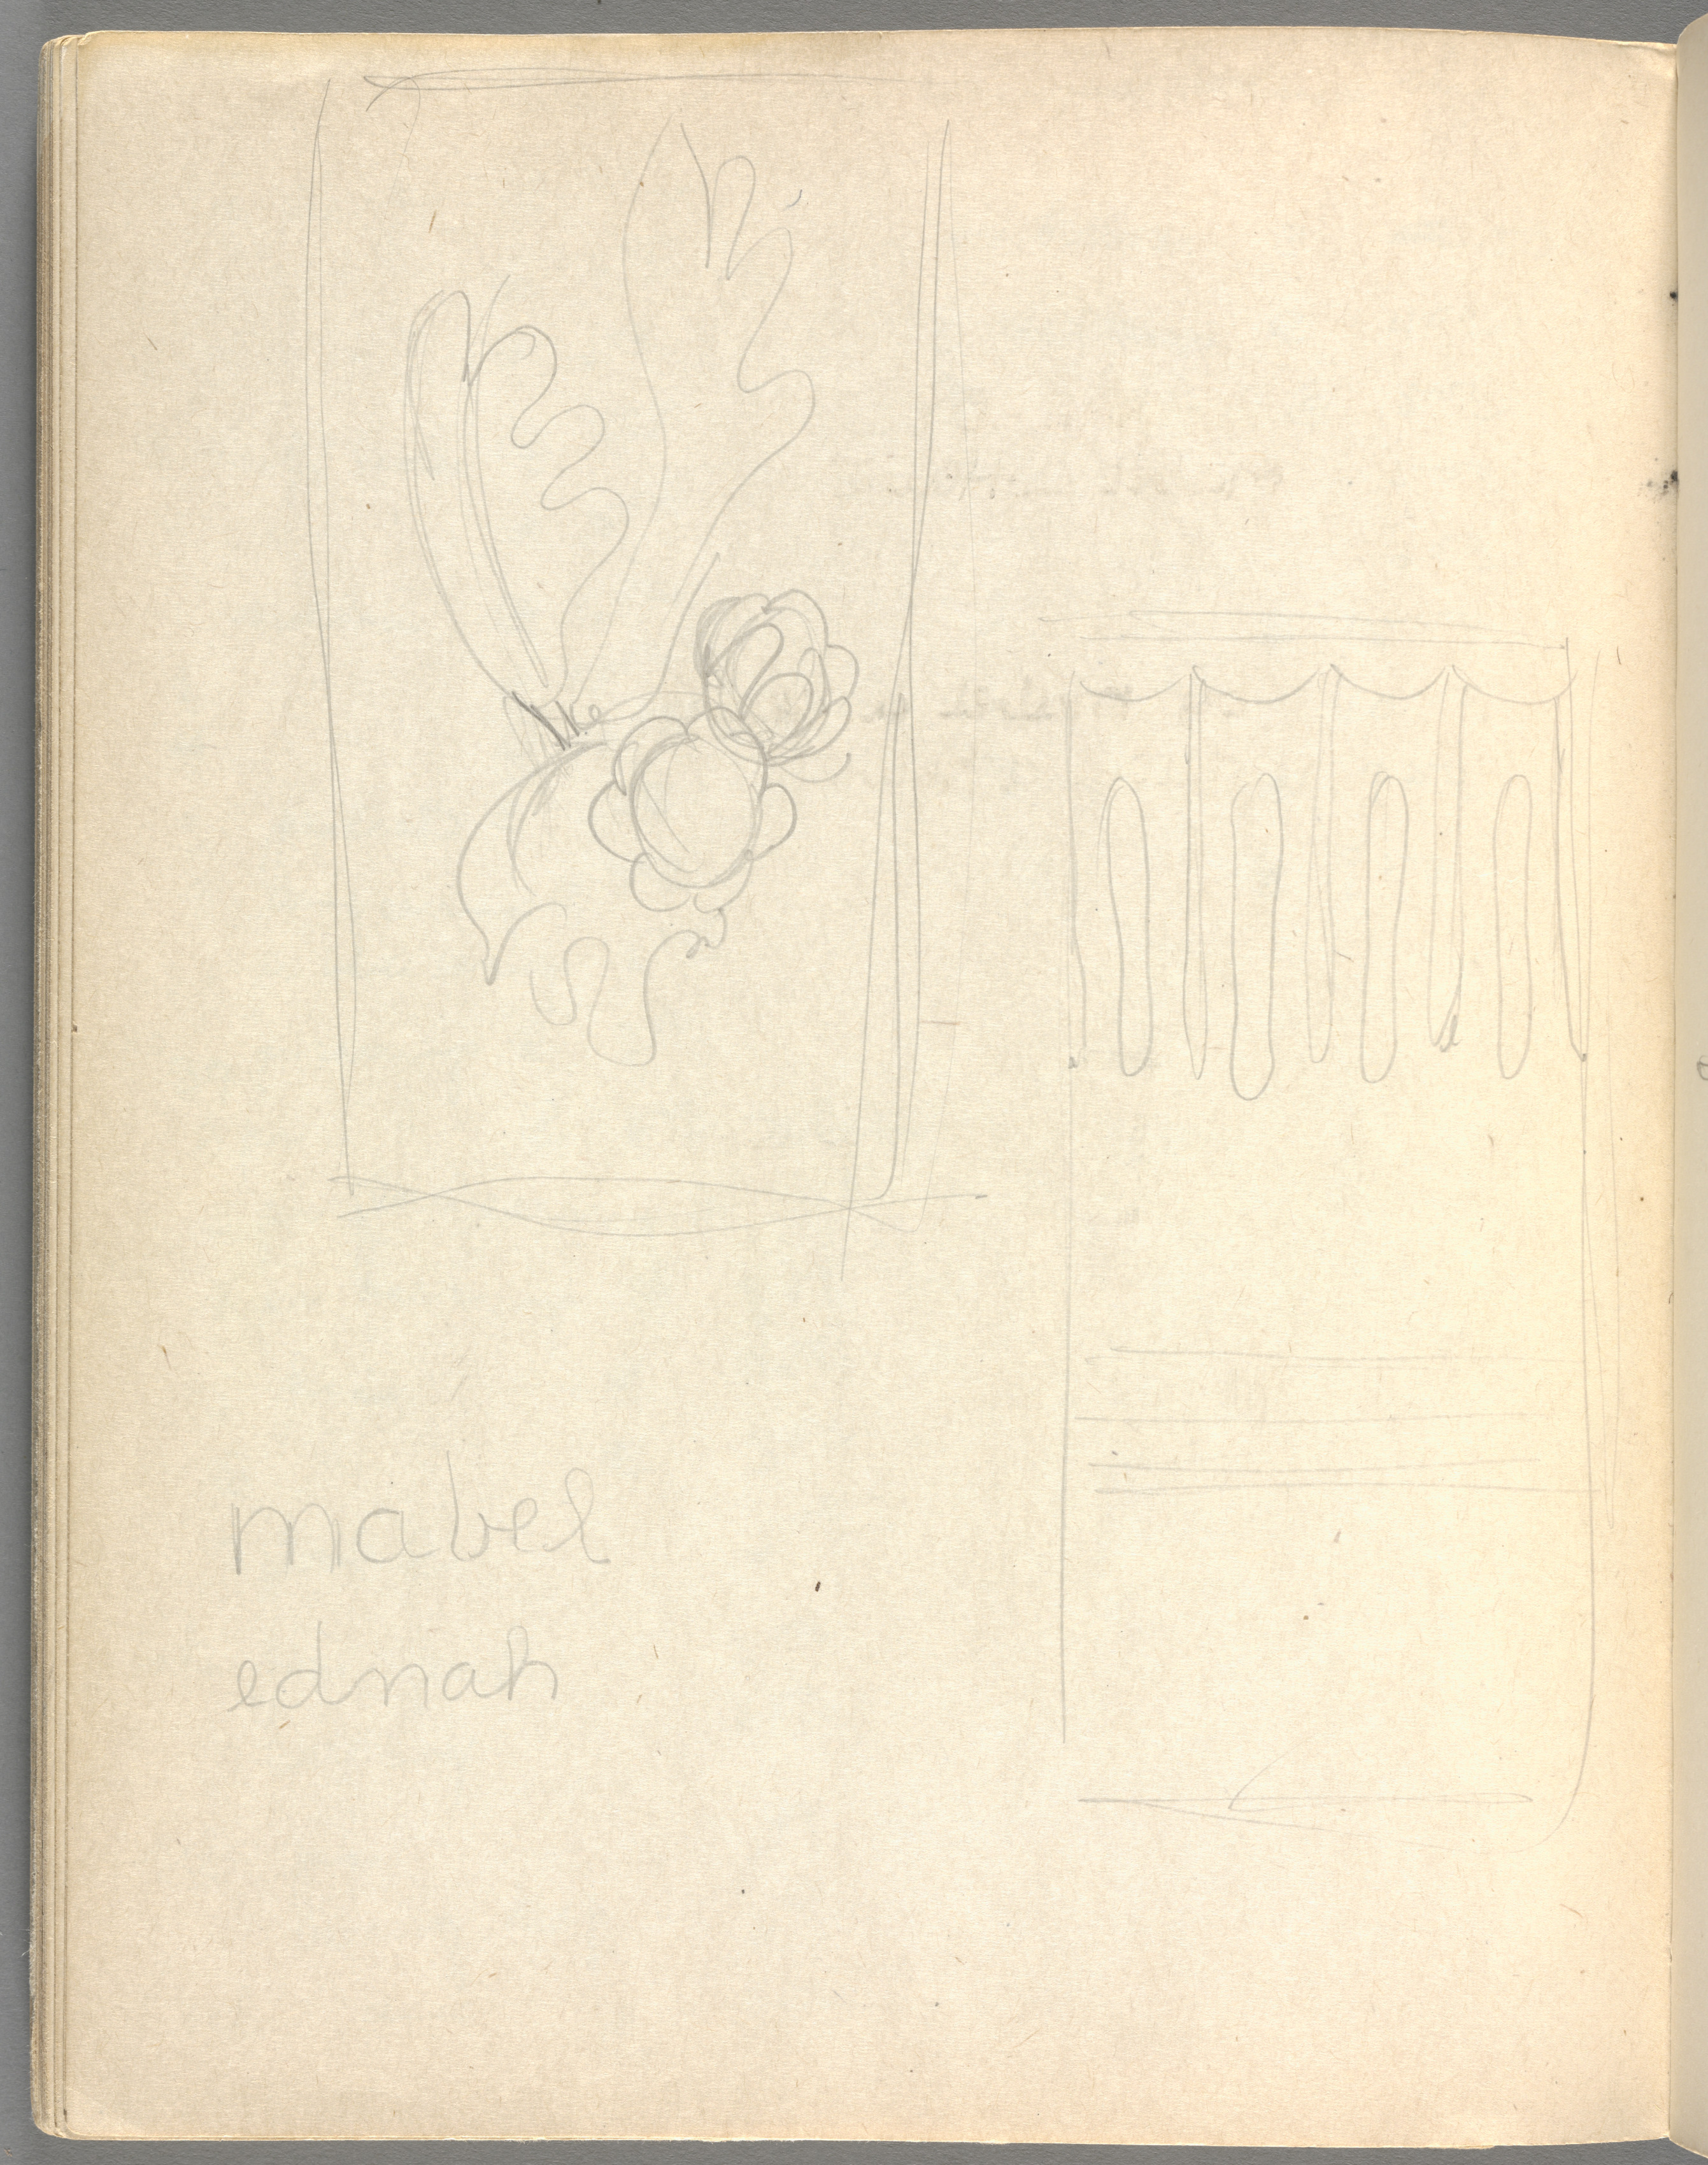 Sketchbook No. 6, page 182: Pencil sketches inscribed mabel ednah